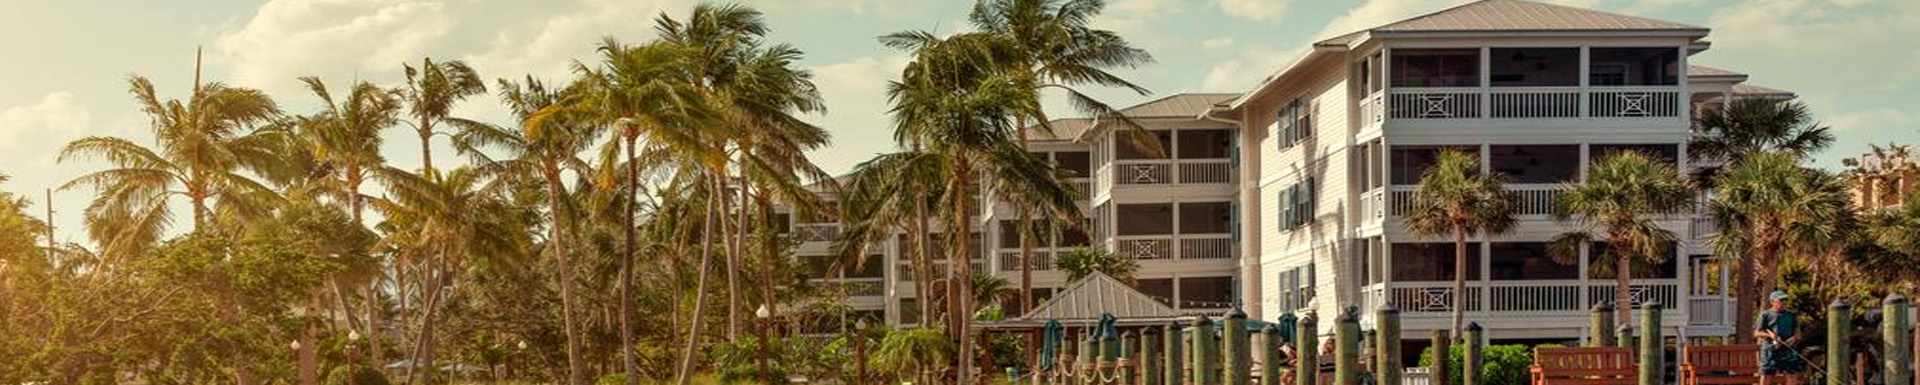 Hyatt Residence Club Key West, Beach House